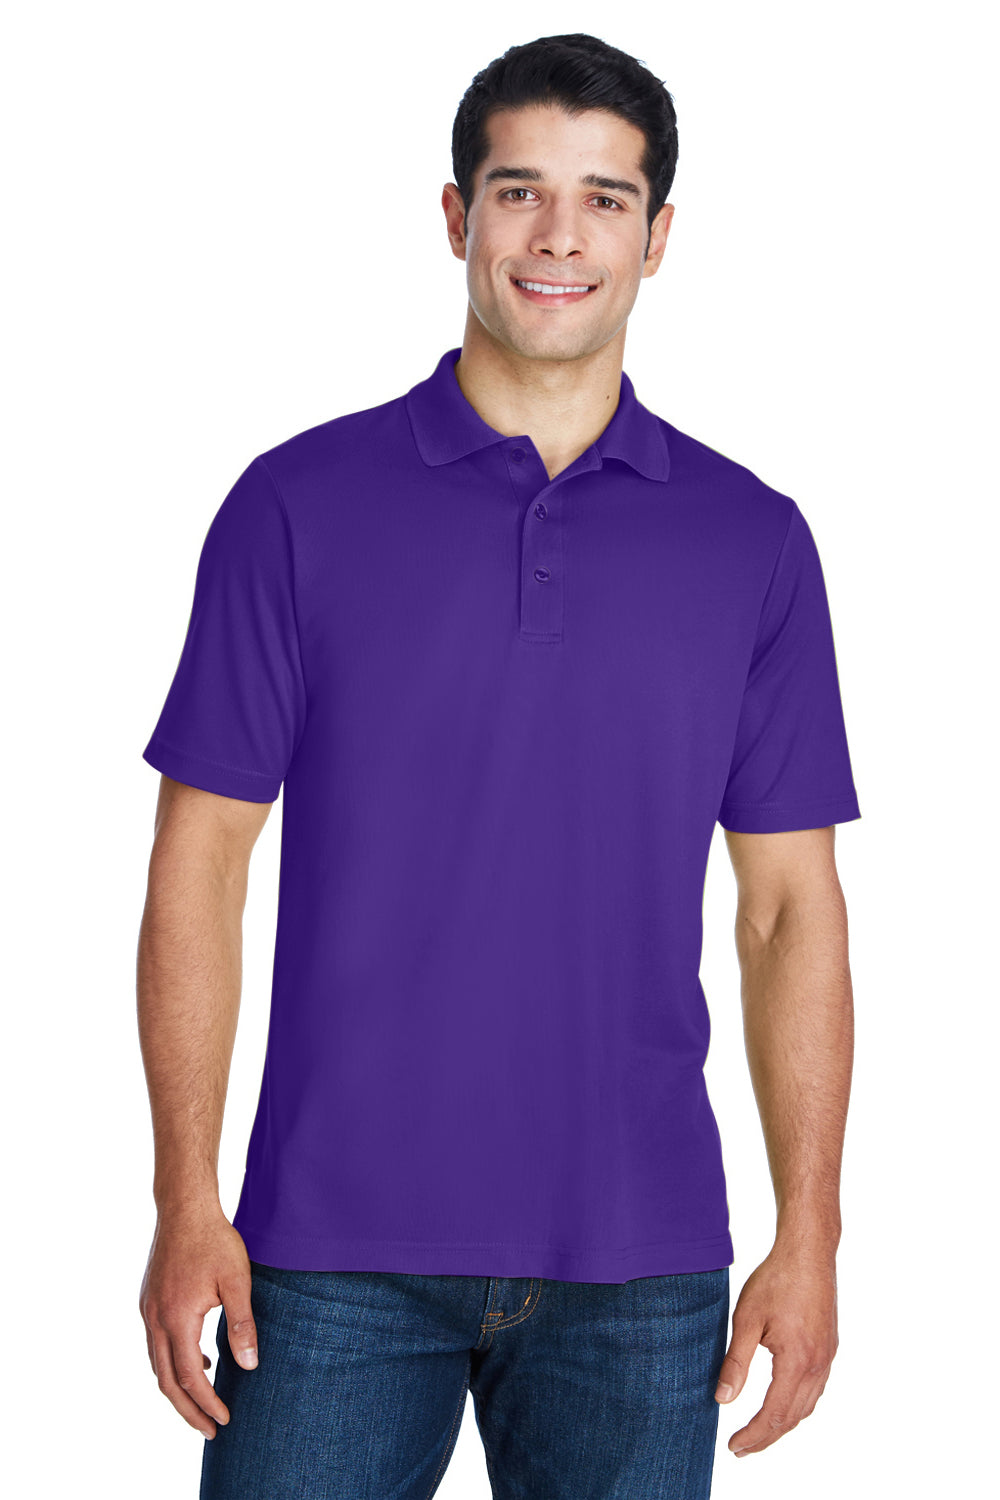 Core 365 88181 Mens Origin Performance Moisture Wicking Short Sleeve Polo Shirt Purple Front